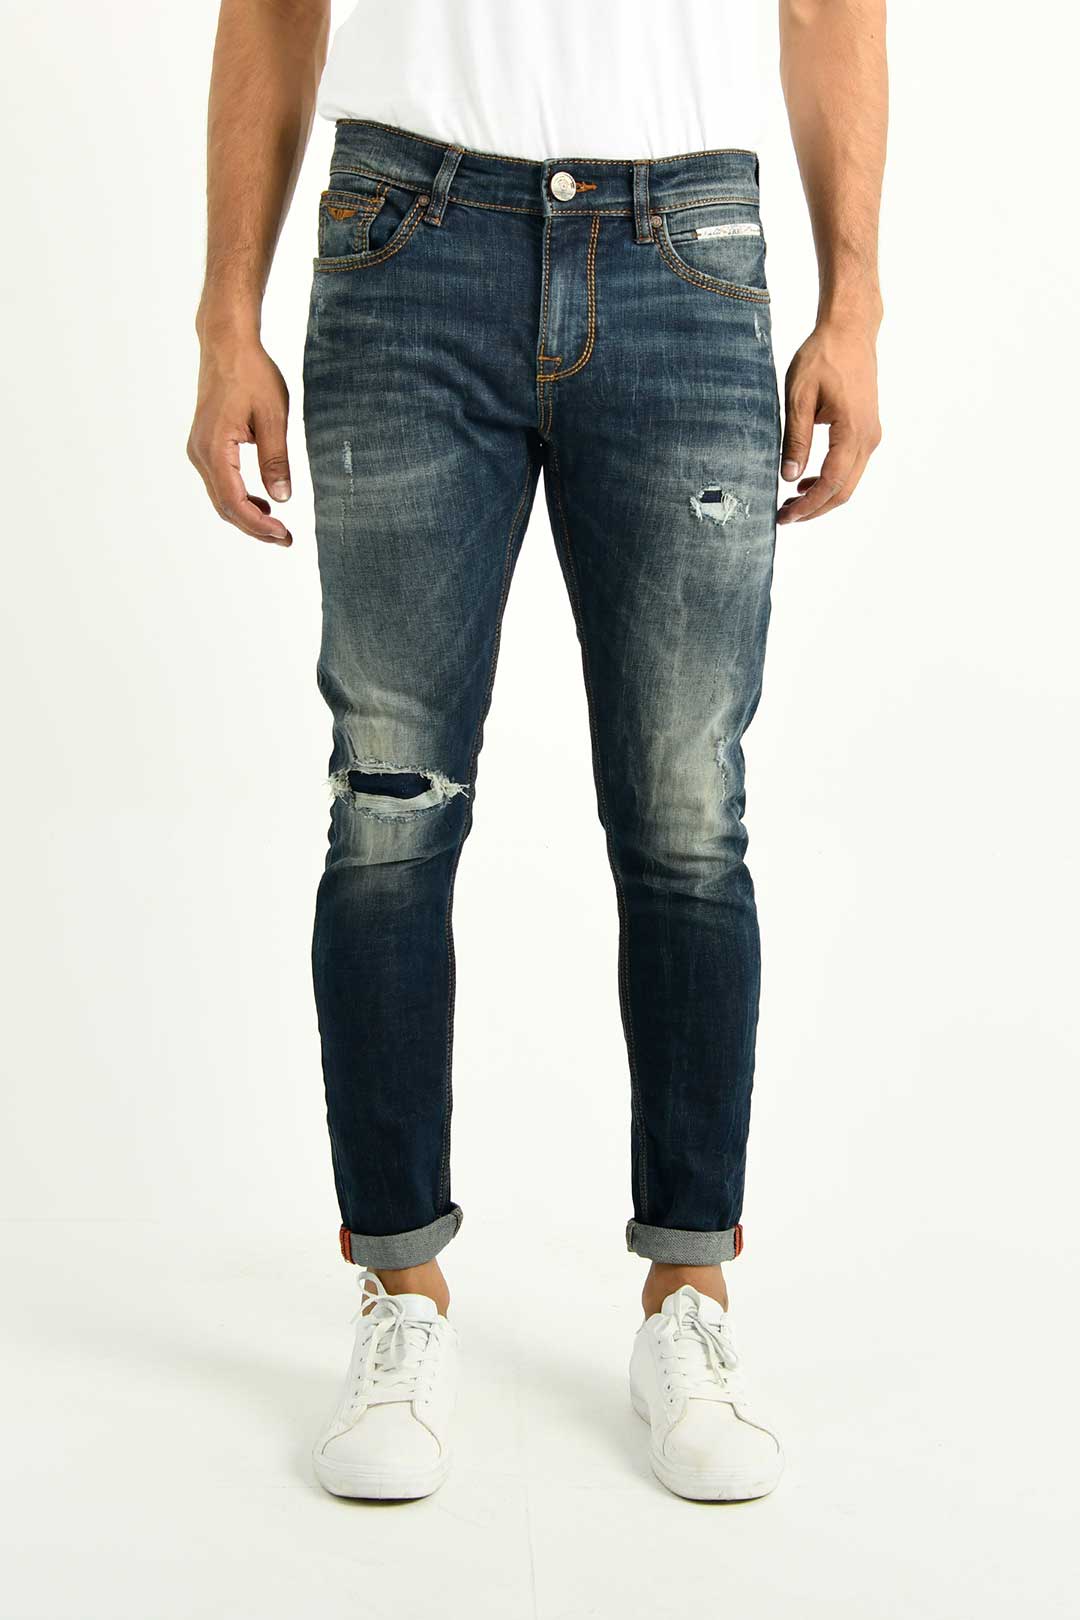 Men’s Denim Jeans-RJ3902